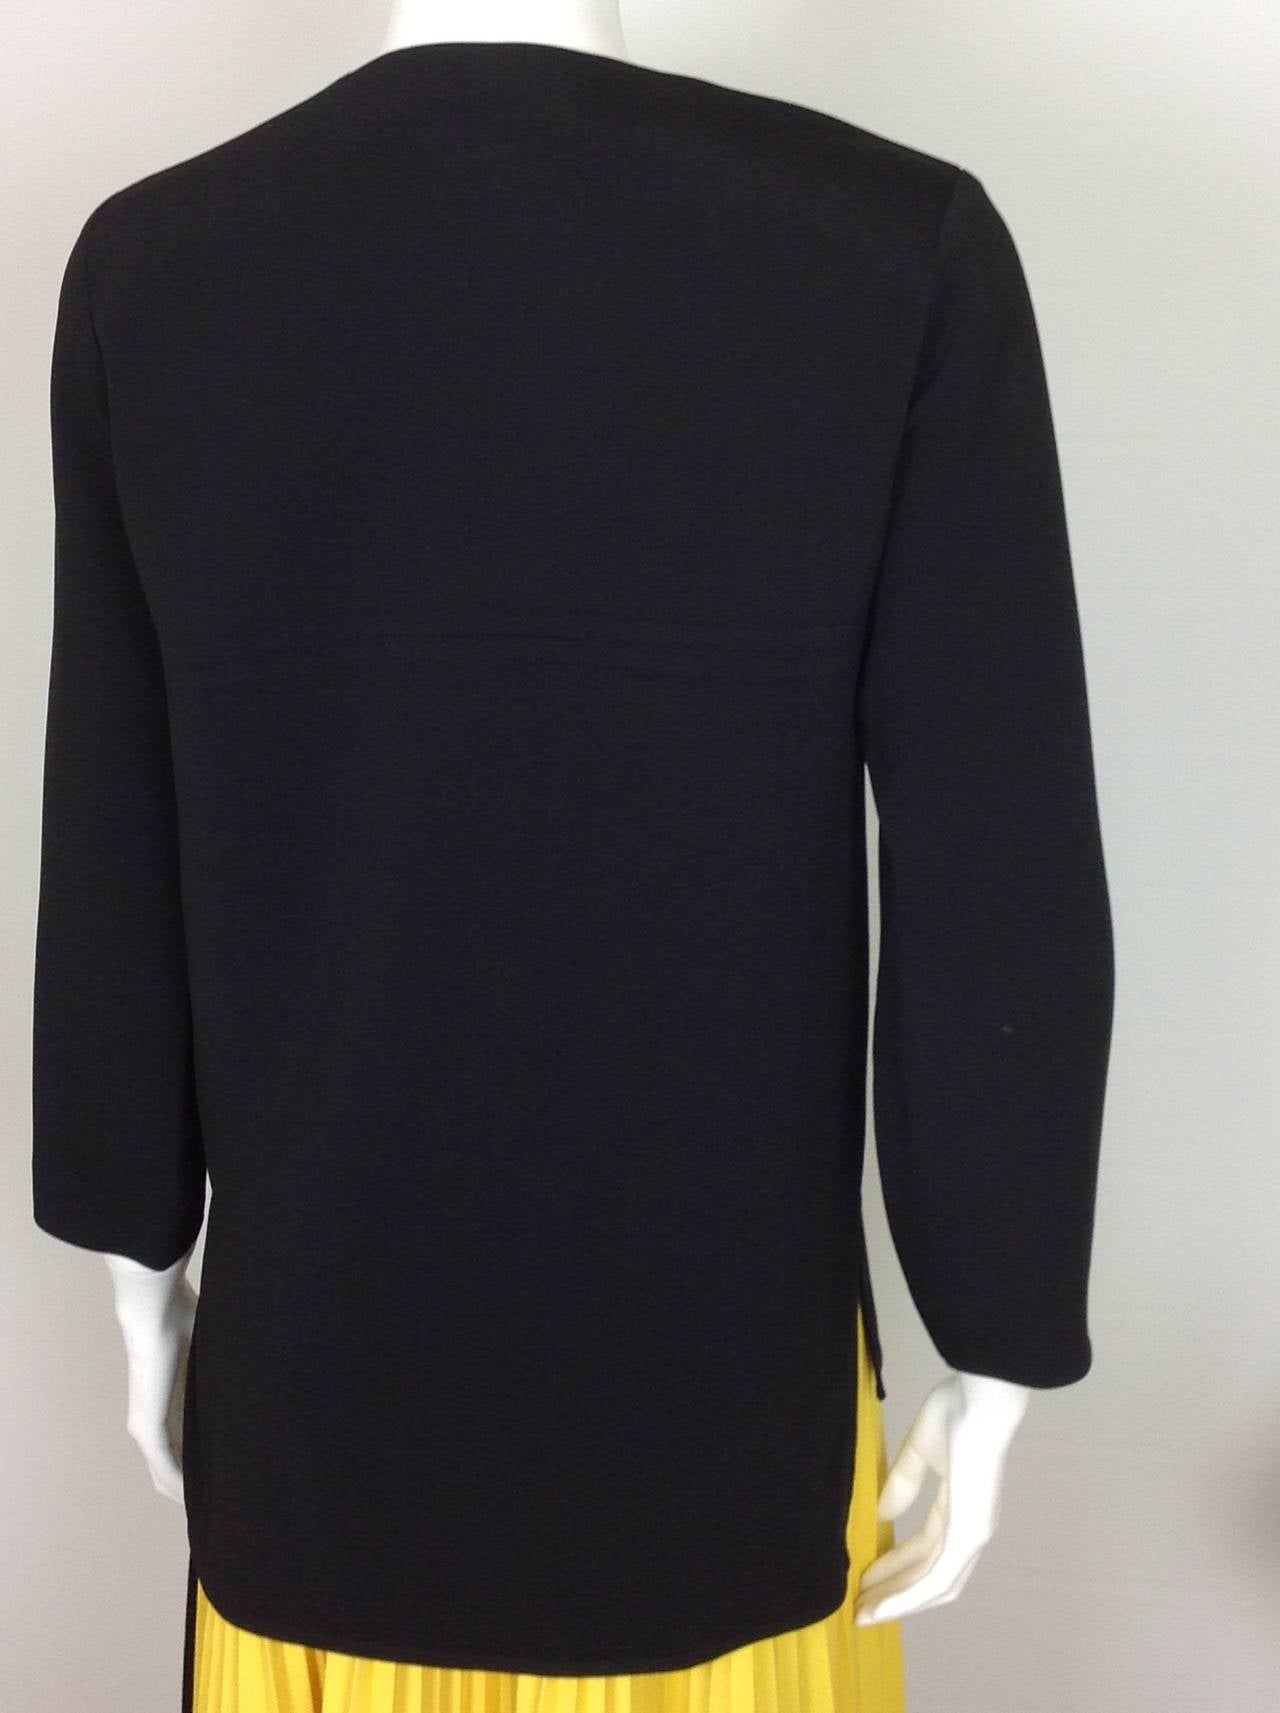 Women's Stella McCartney tunic with silvertone zipper     Size 36